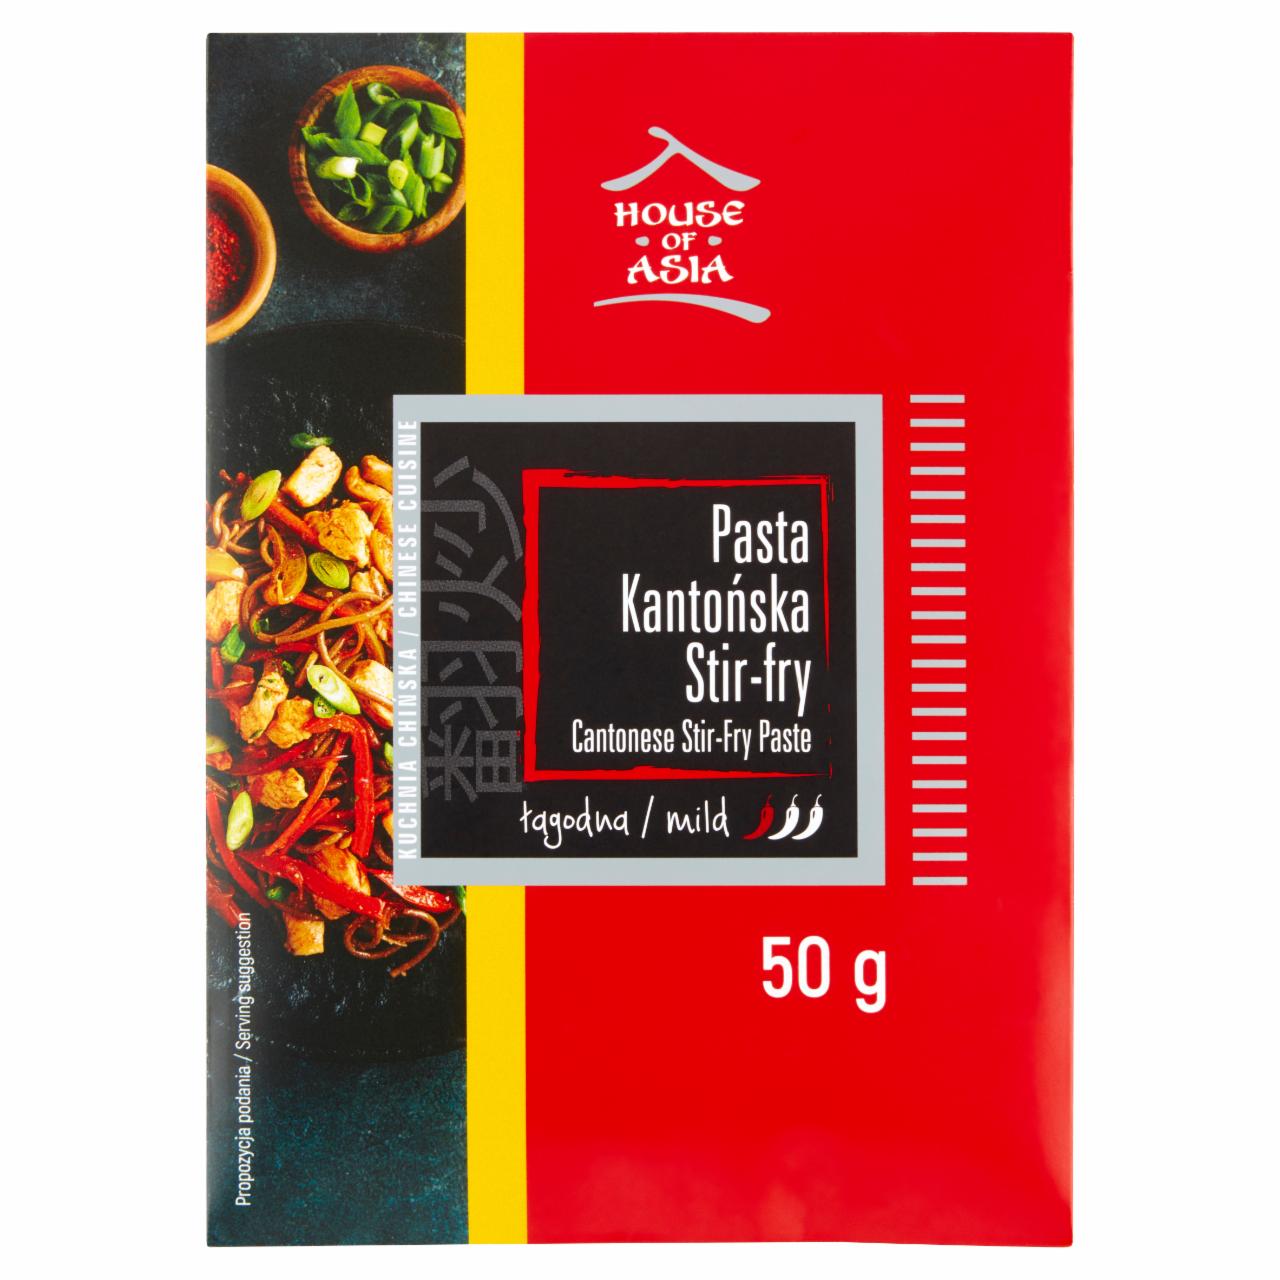 Zdjęcia - House of Asia Pasta kantońska Stir-Fry łagodna 50 g